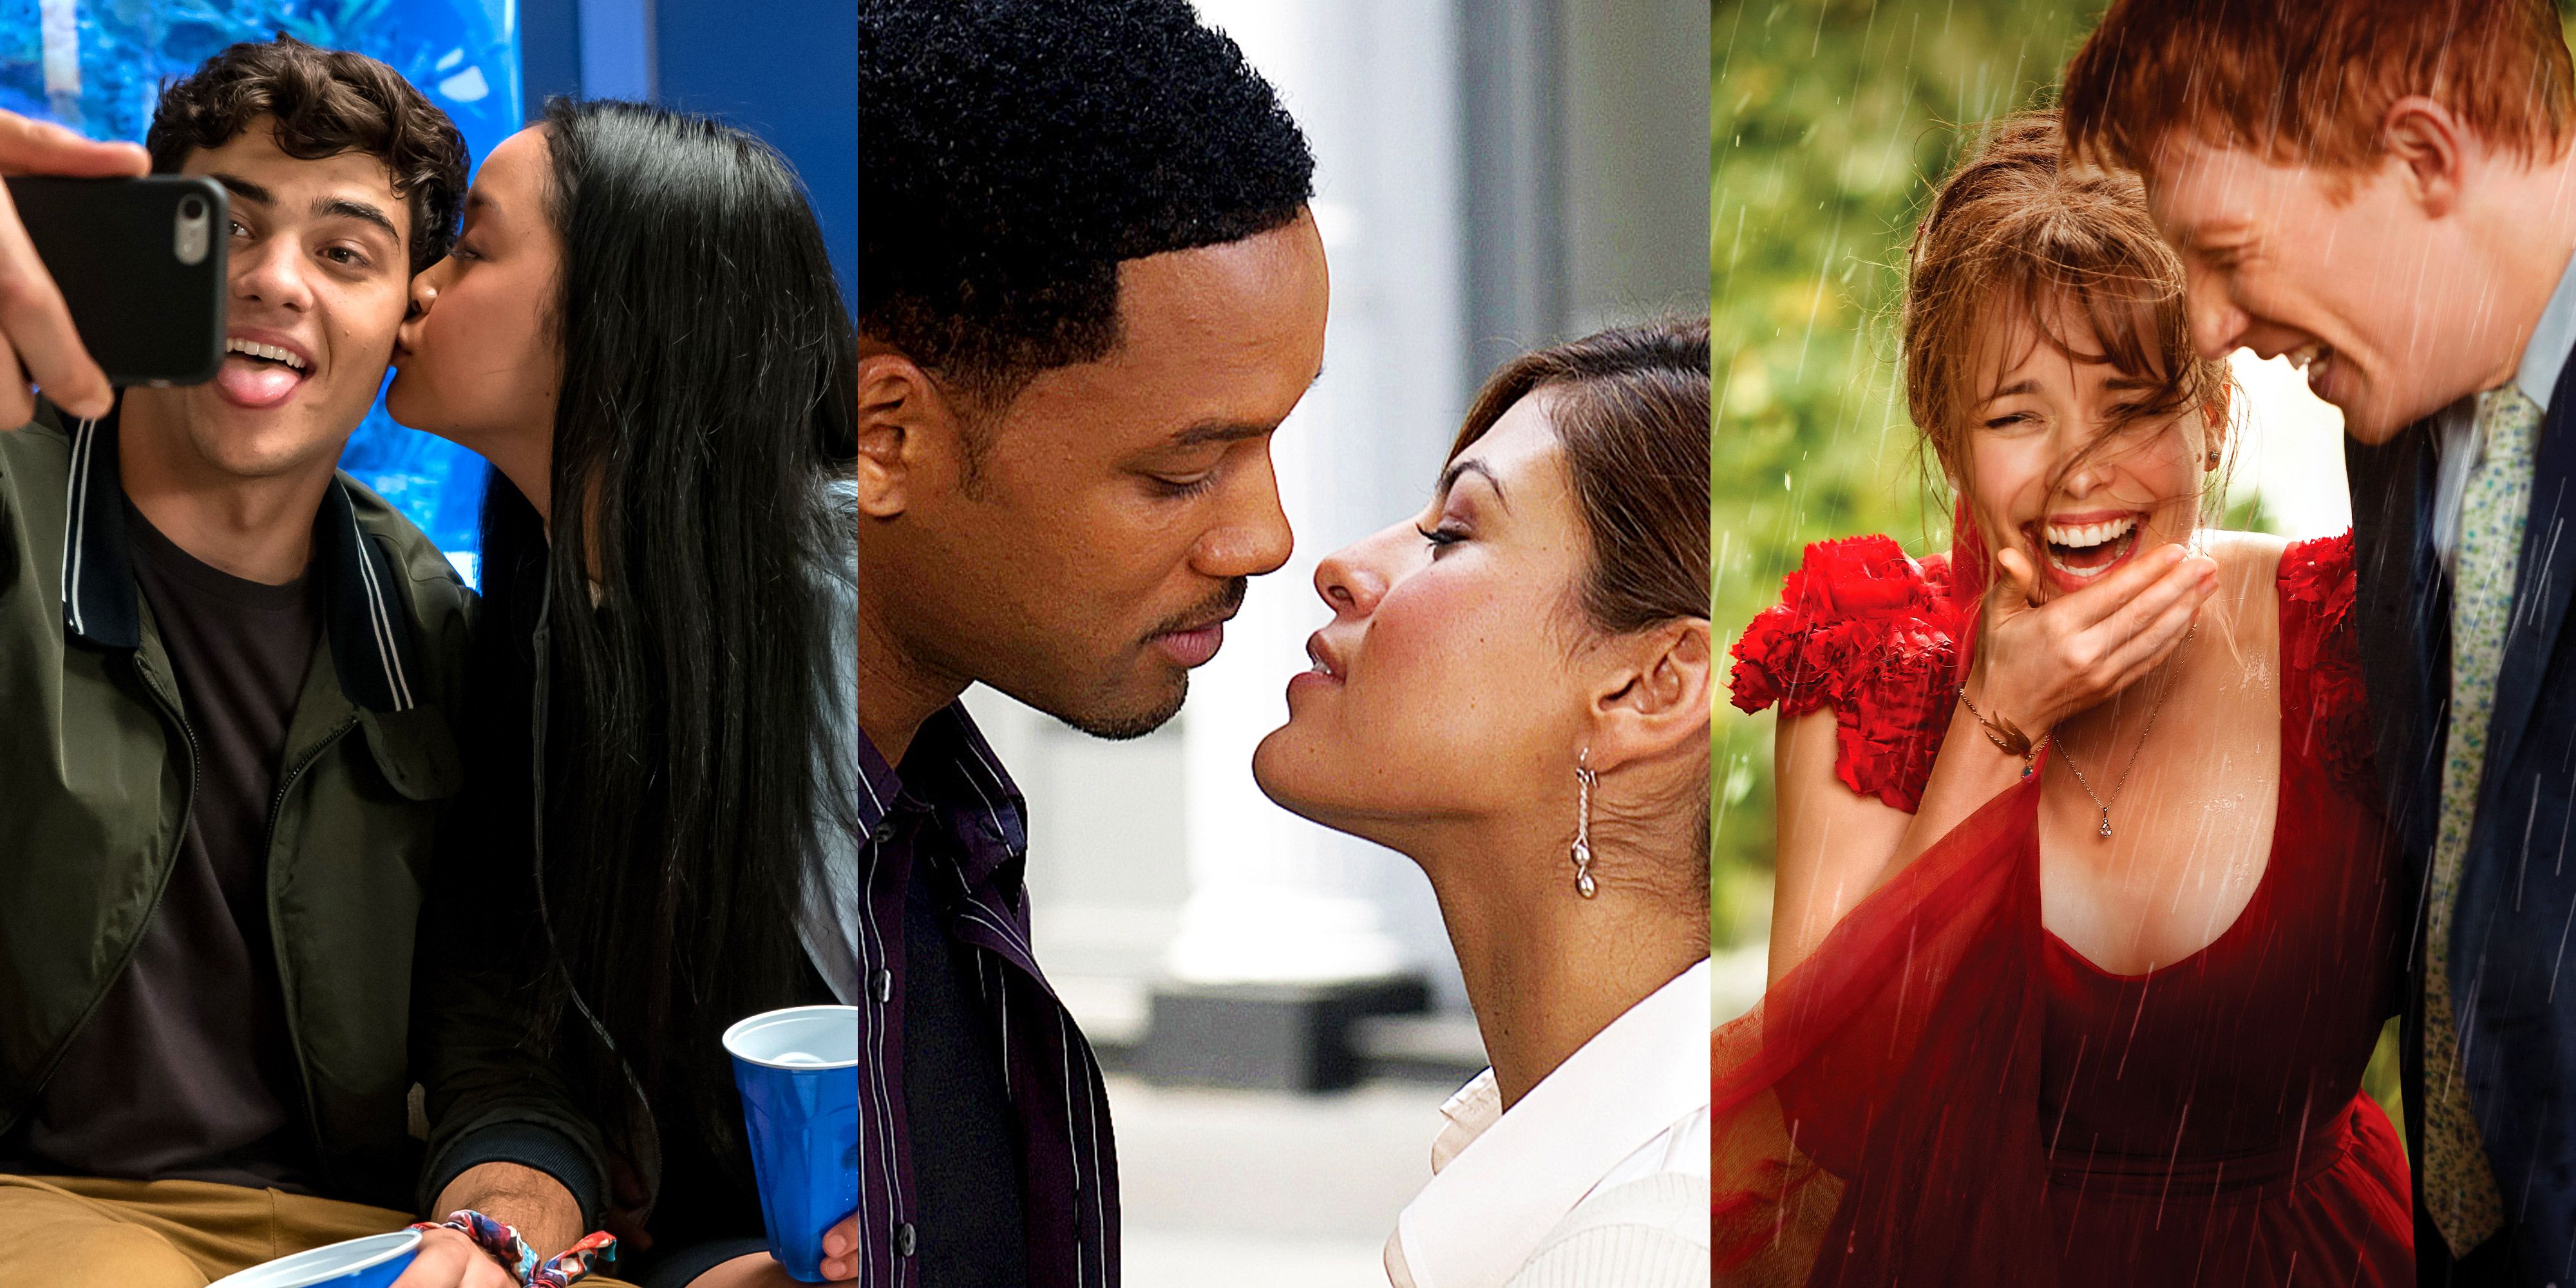 Best Romantic Movies on Netflix 2021 - Top Romance Films to Stream Now